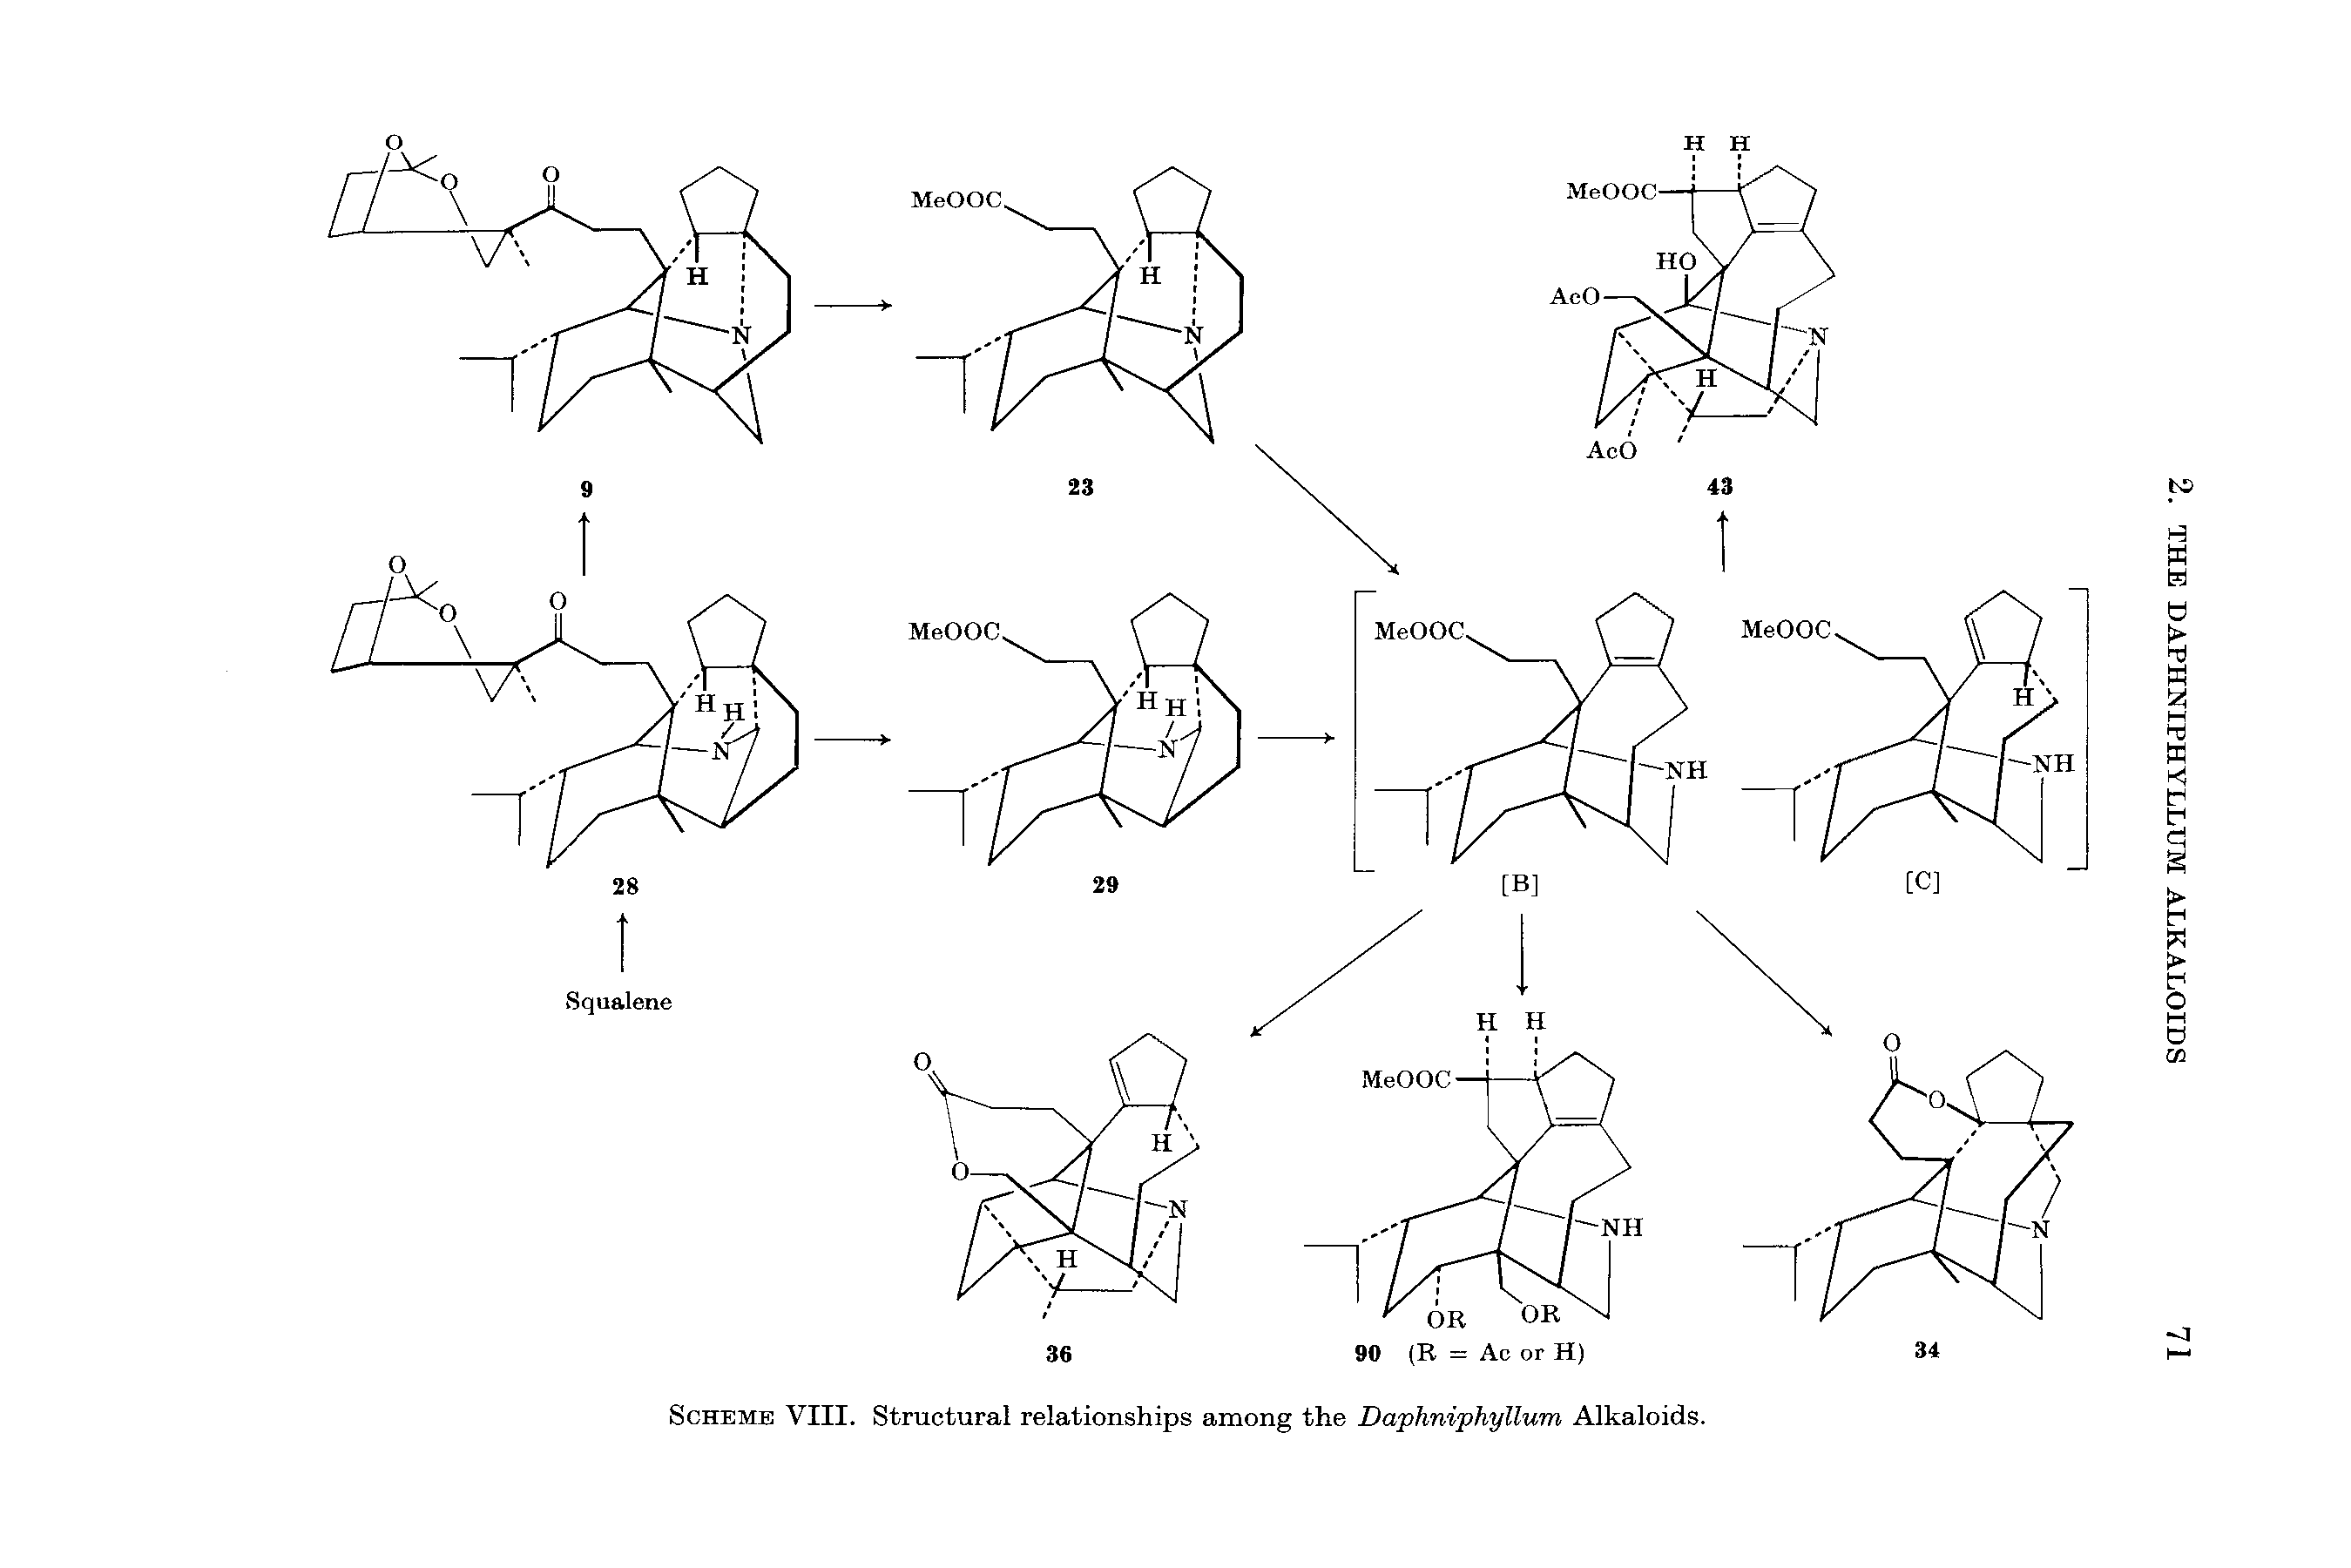 Scheme VIII. Structural relationships among the Daphniphyllum Alkaloids.